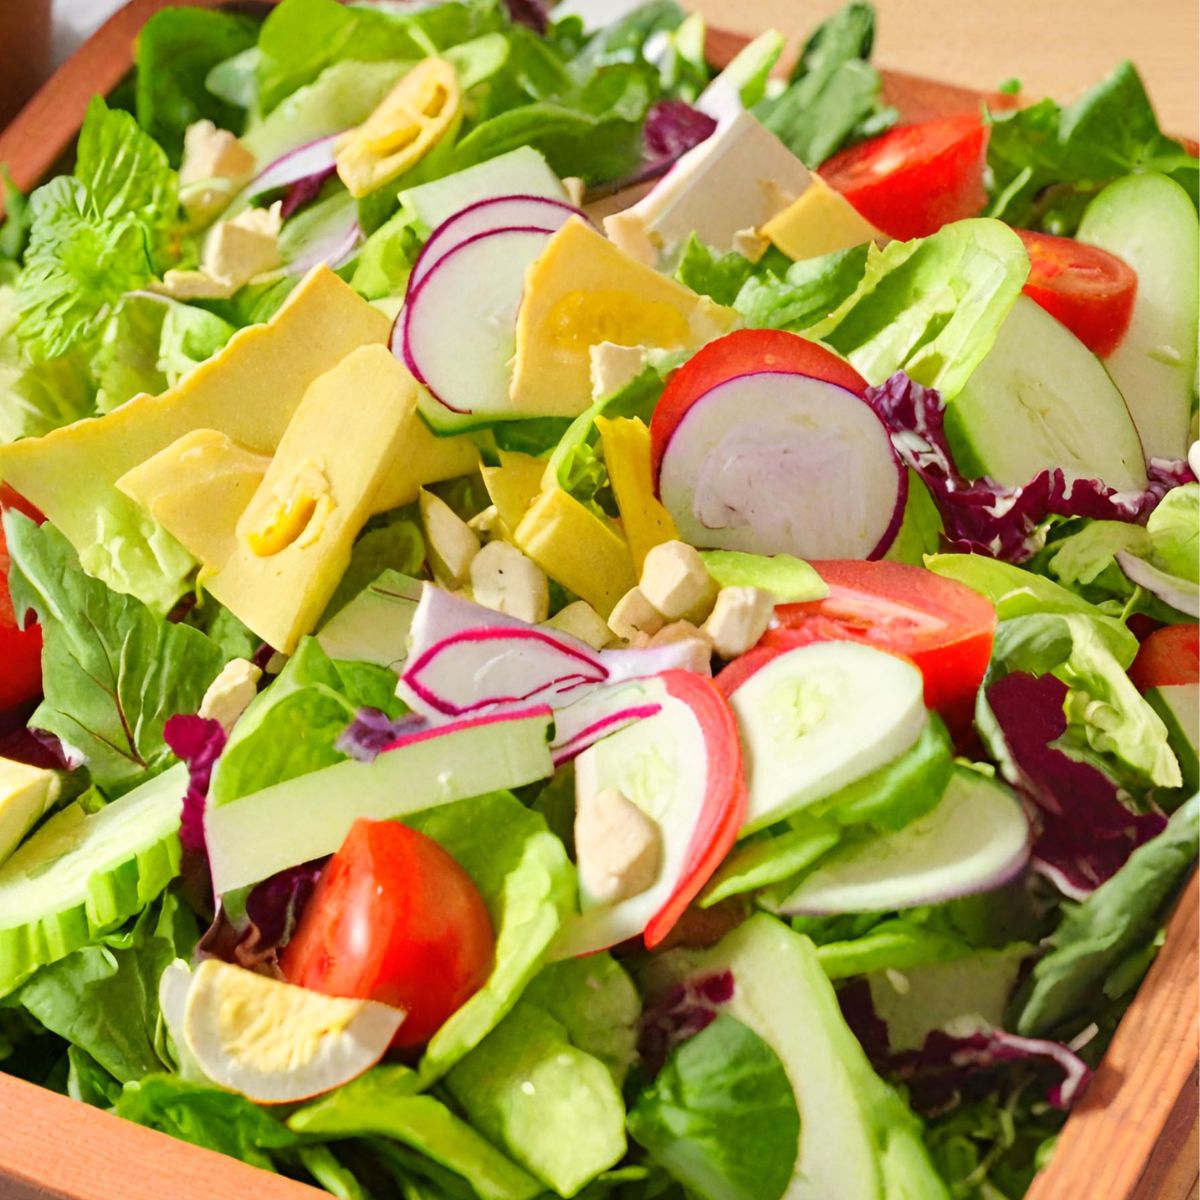 Garden Salad "Colourful, Crunchy, and Healthy"